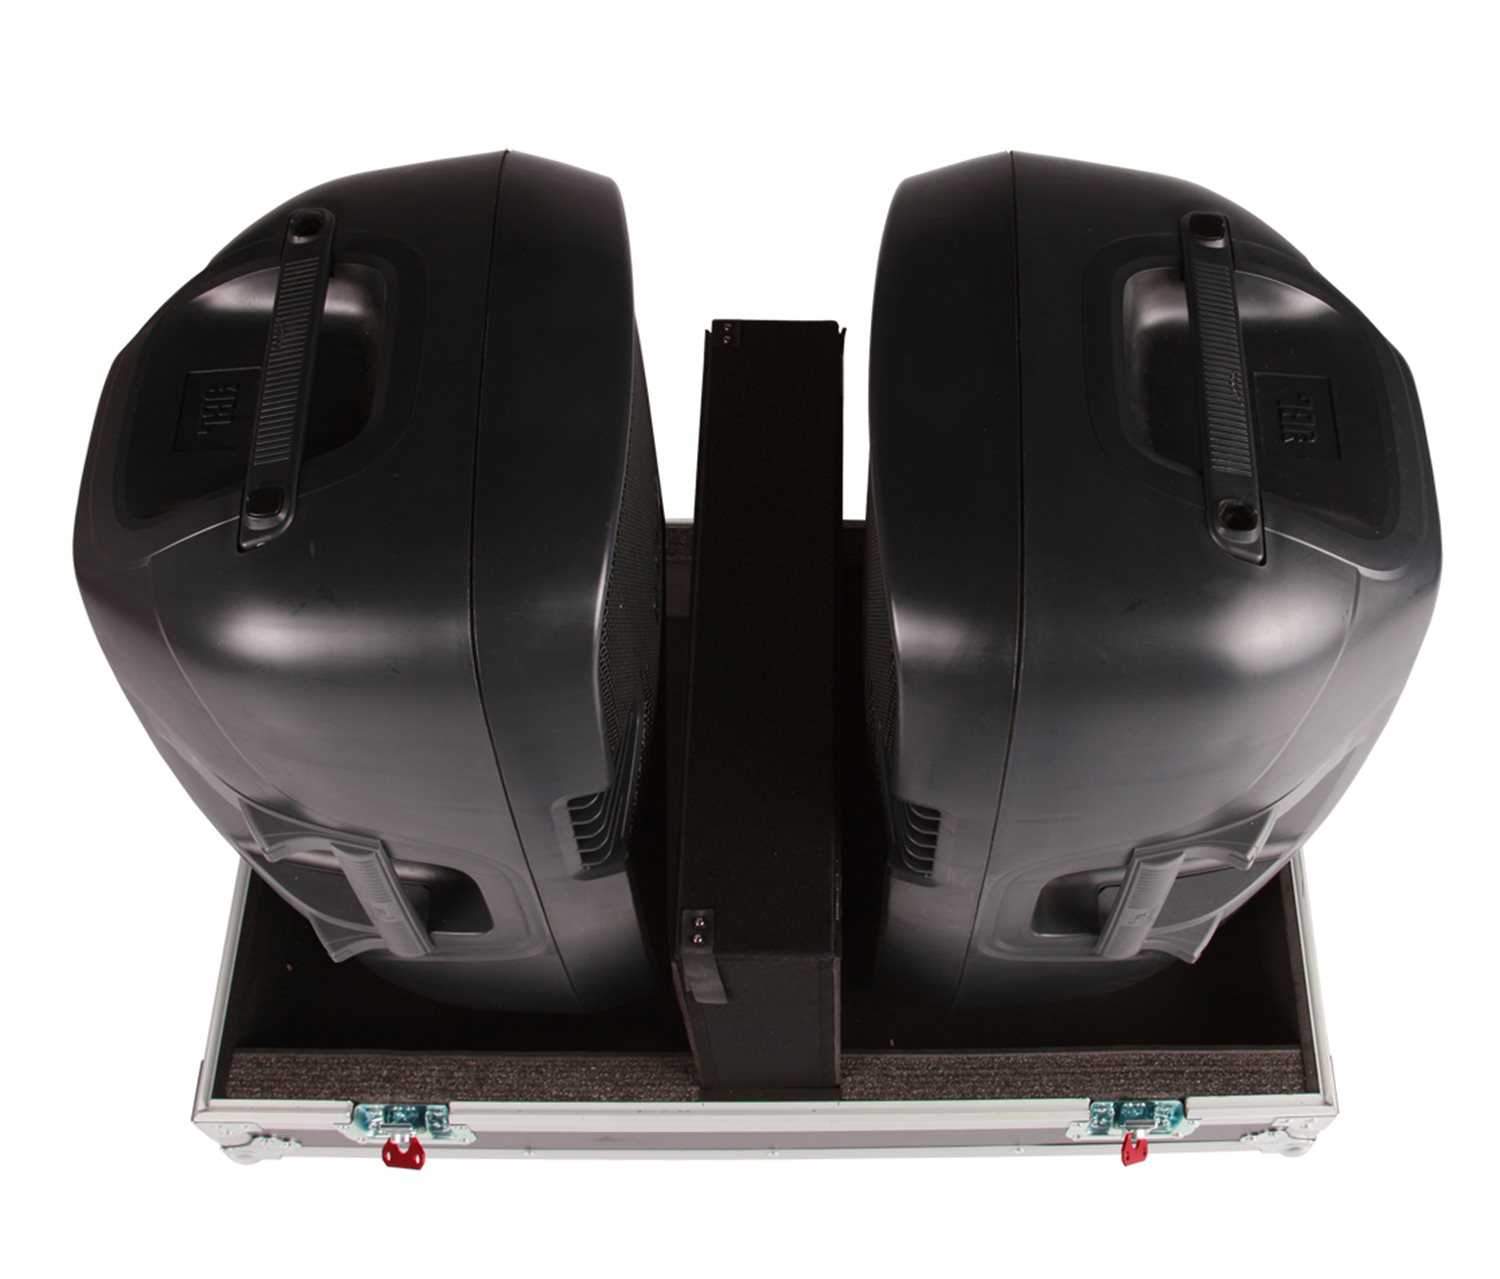 Gator G-Tour SPKR-215 Transporter Case for 2x 15-Inch Speakers - ProSound and Stage Lighting